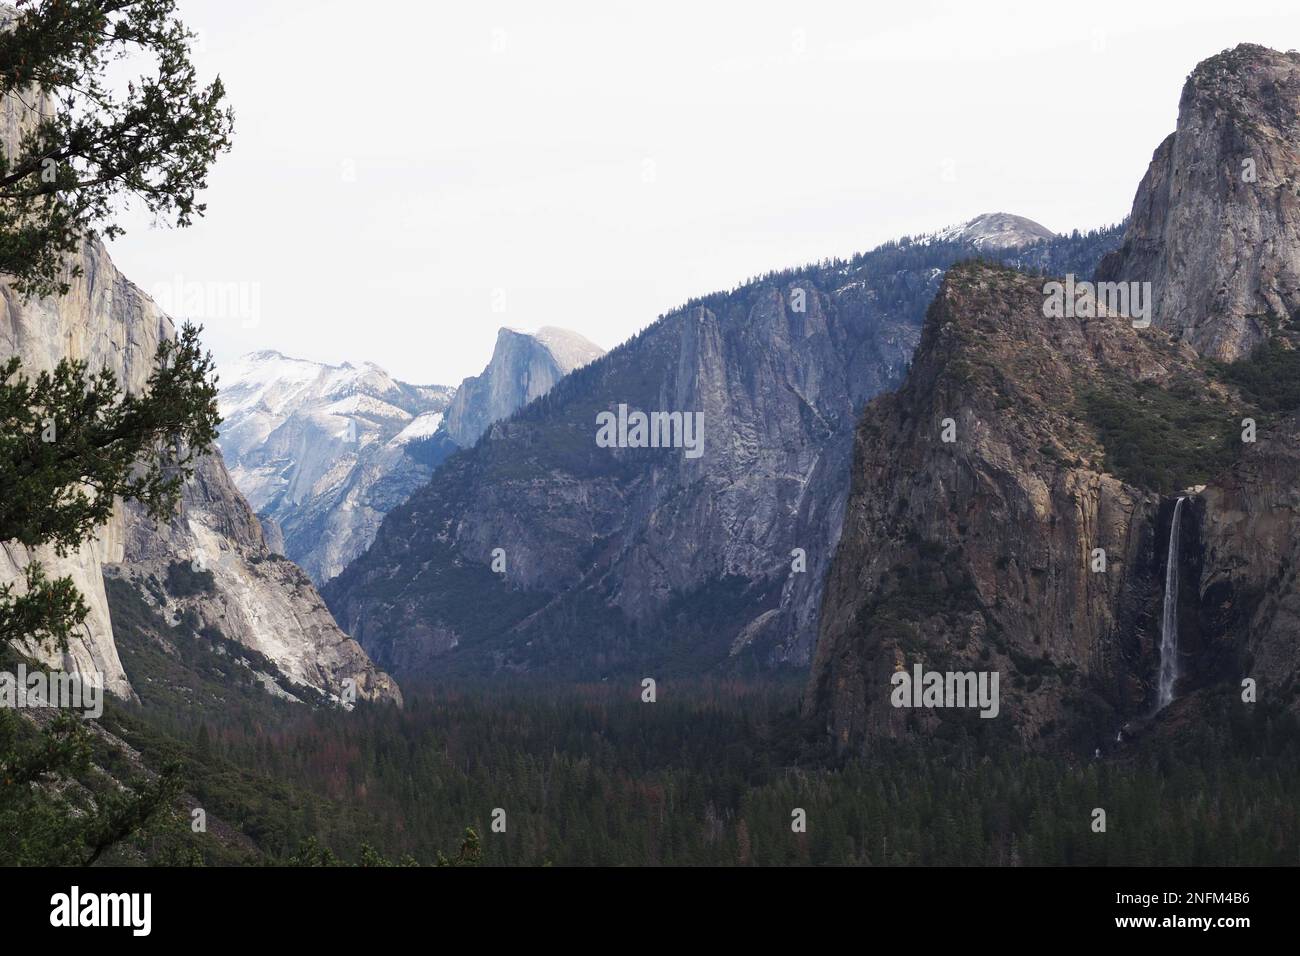 Panoramic view of El Capitan, Bridalveil Fall, and Half Dome at Yosemite National Park Stock Photo